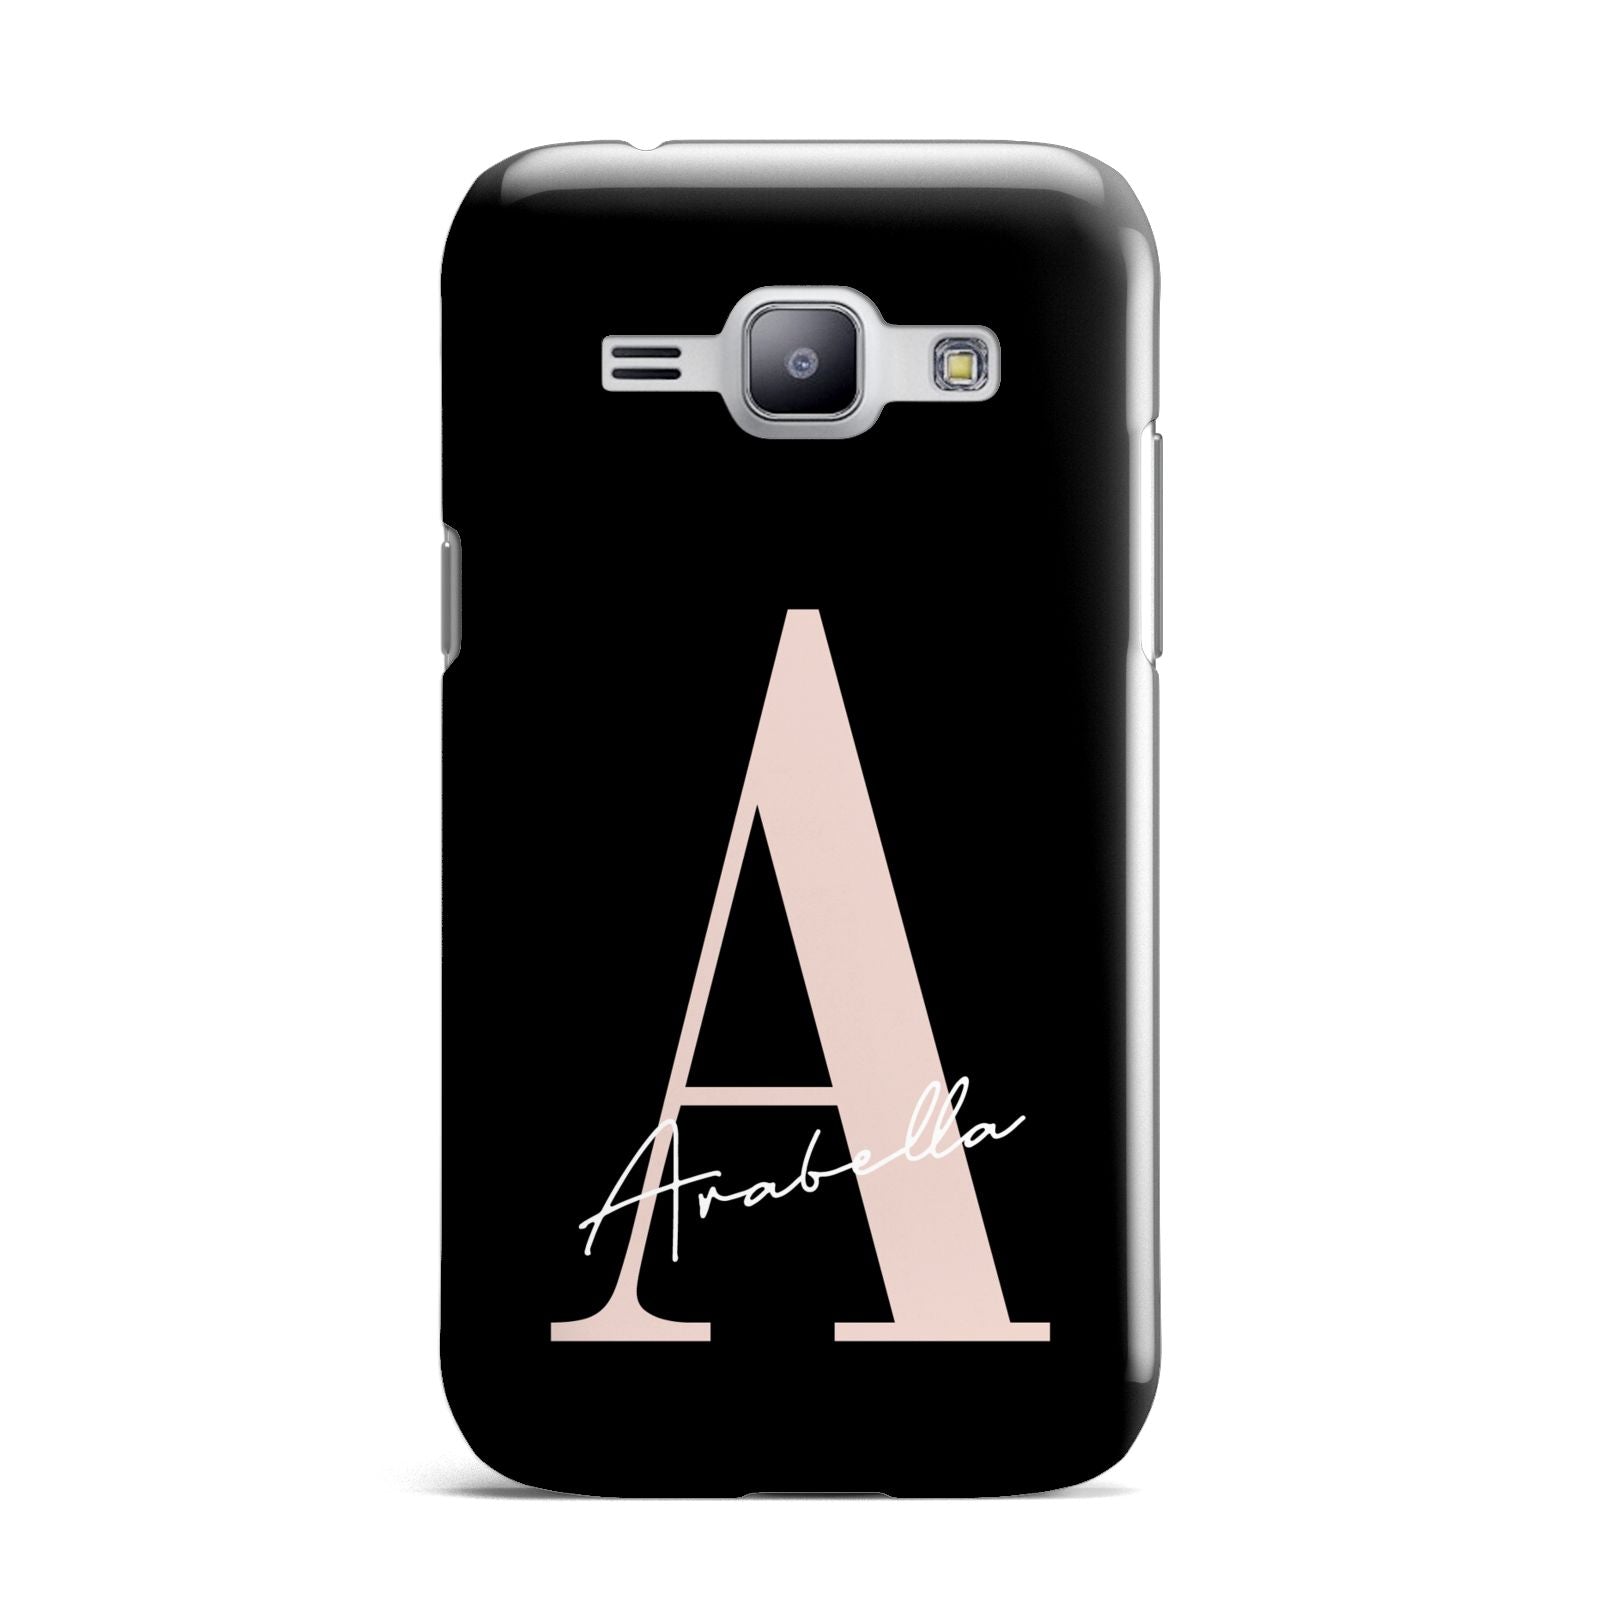 Personalised Black Pink Initial Samsung Galaxy J1 2015 Case